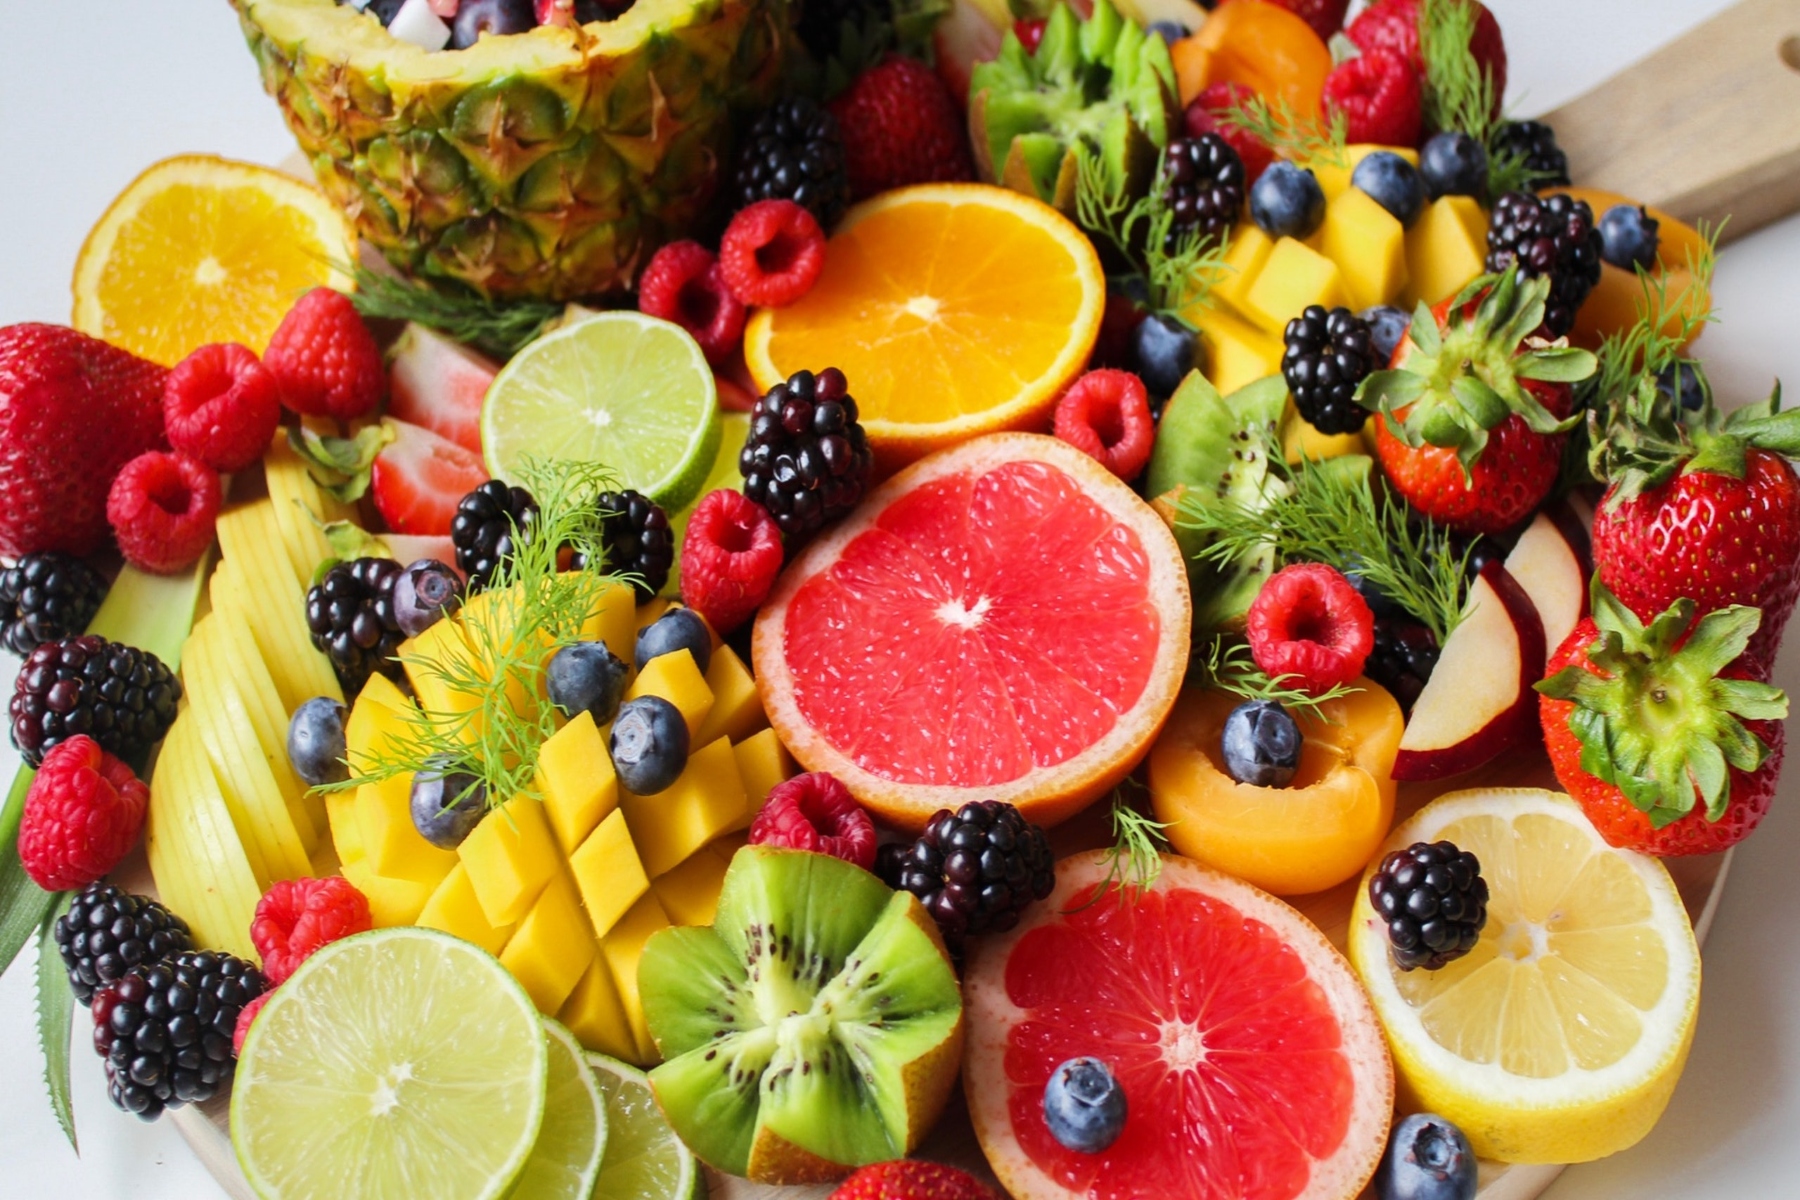 CDC ΗΠΑ διατροφή: Μόνο 1 στους 10 ενήλικες καταναλώνει αρκετά φρούτα και λαχανικά